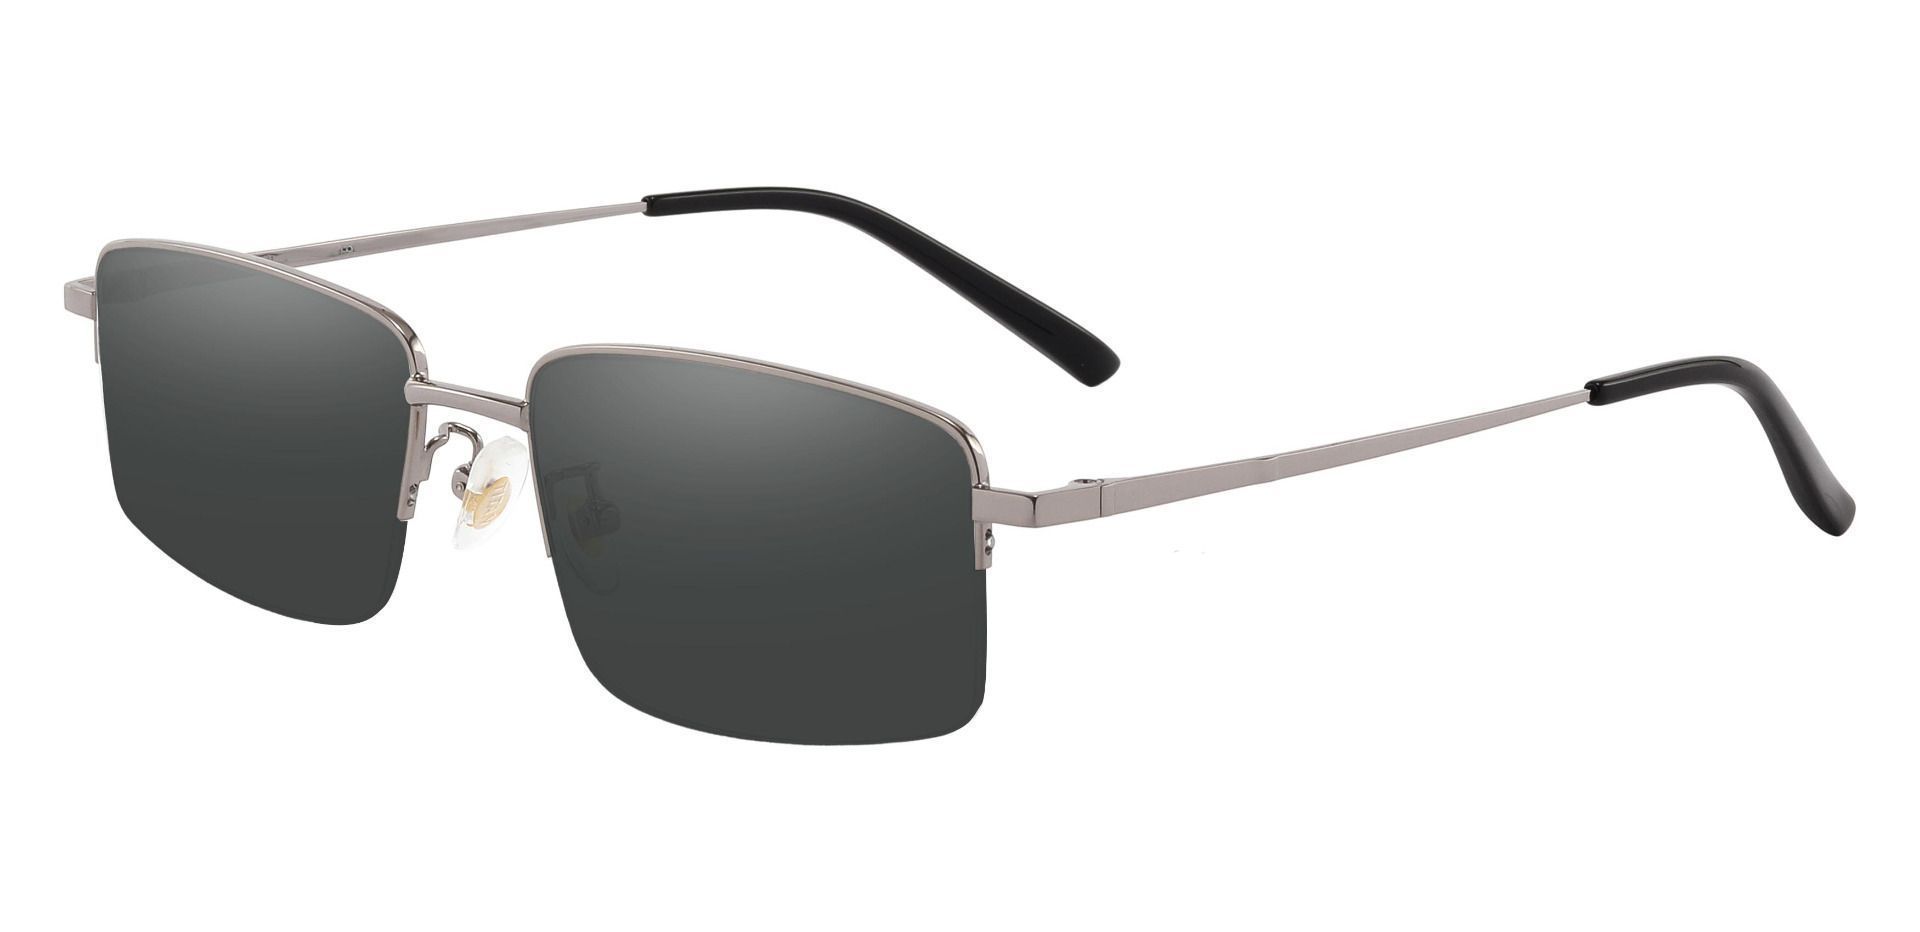 Wayne Rectangle Lined Bifocal Sunglasses - Gray Frame With Gray Lenses